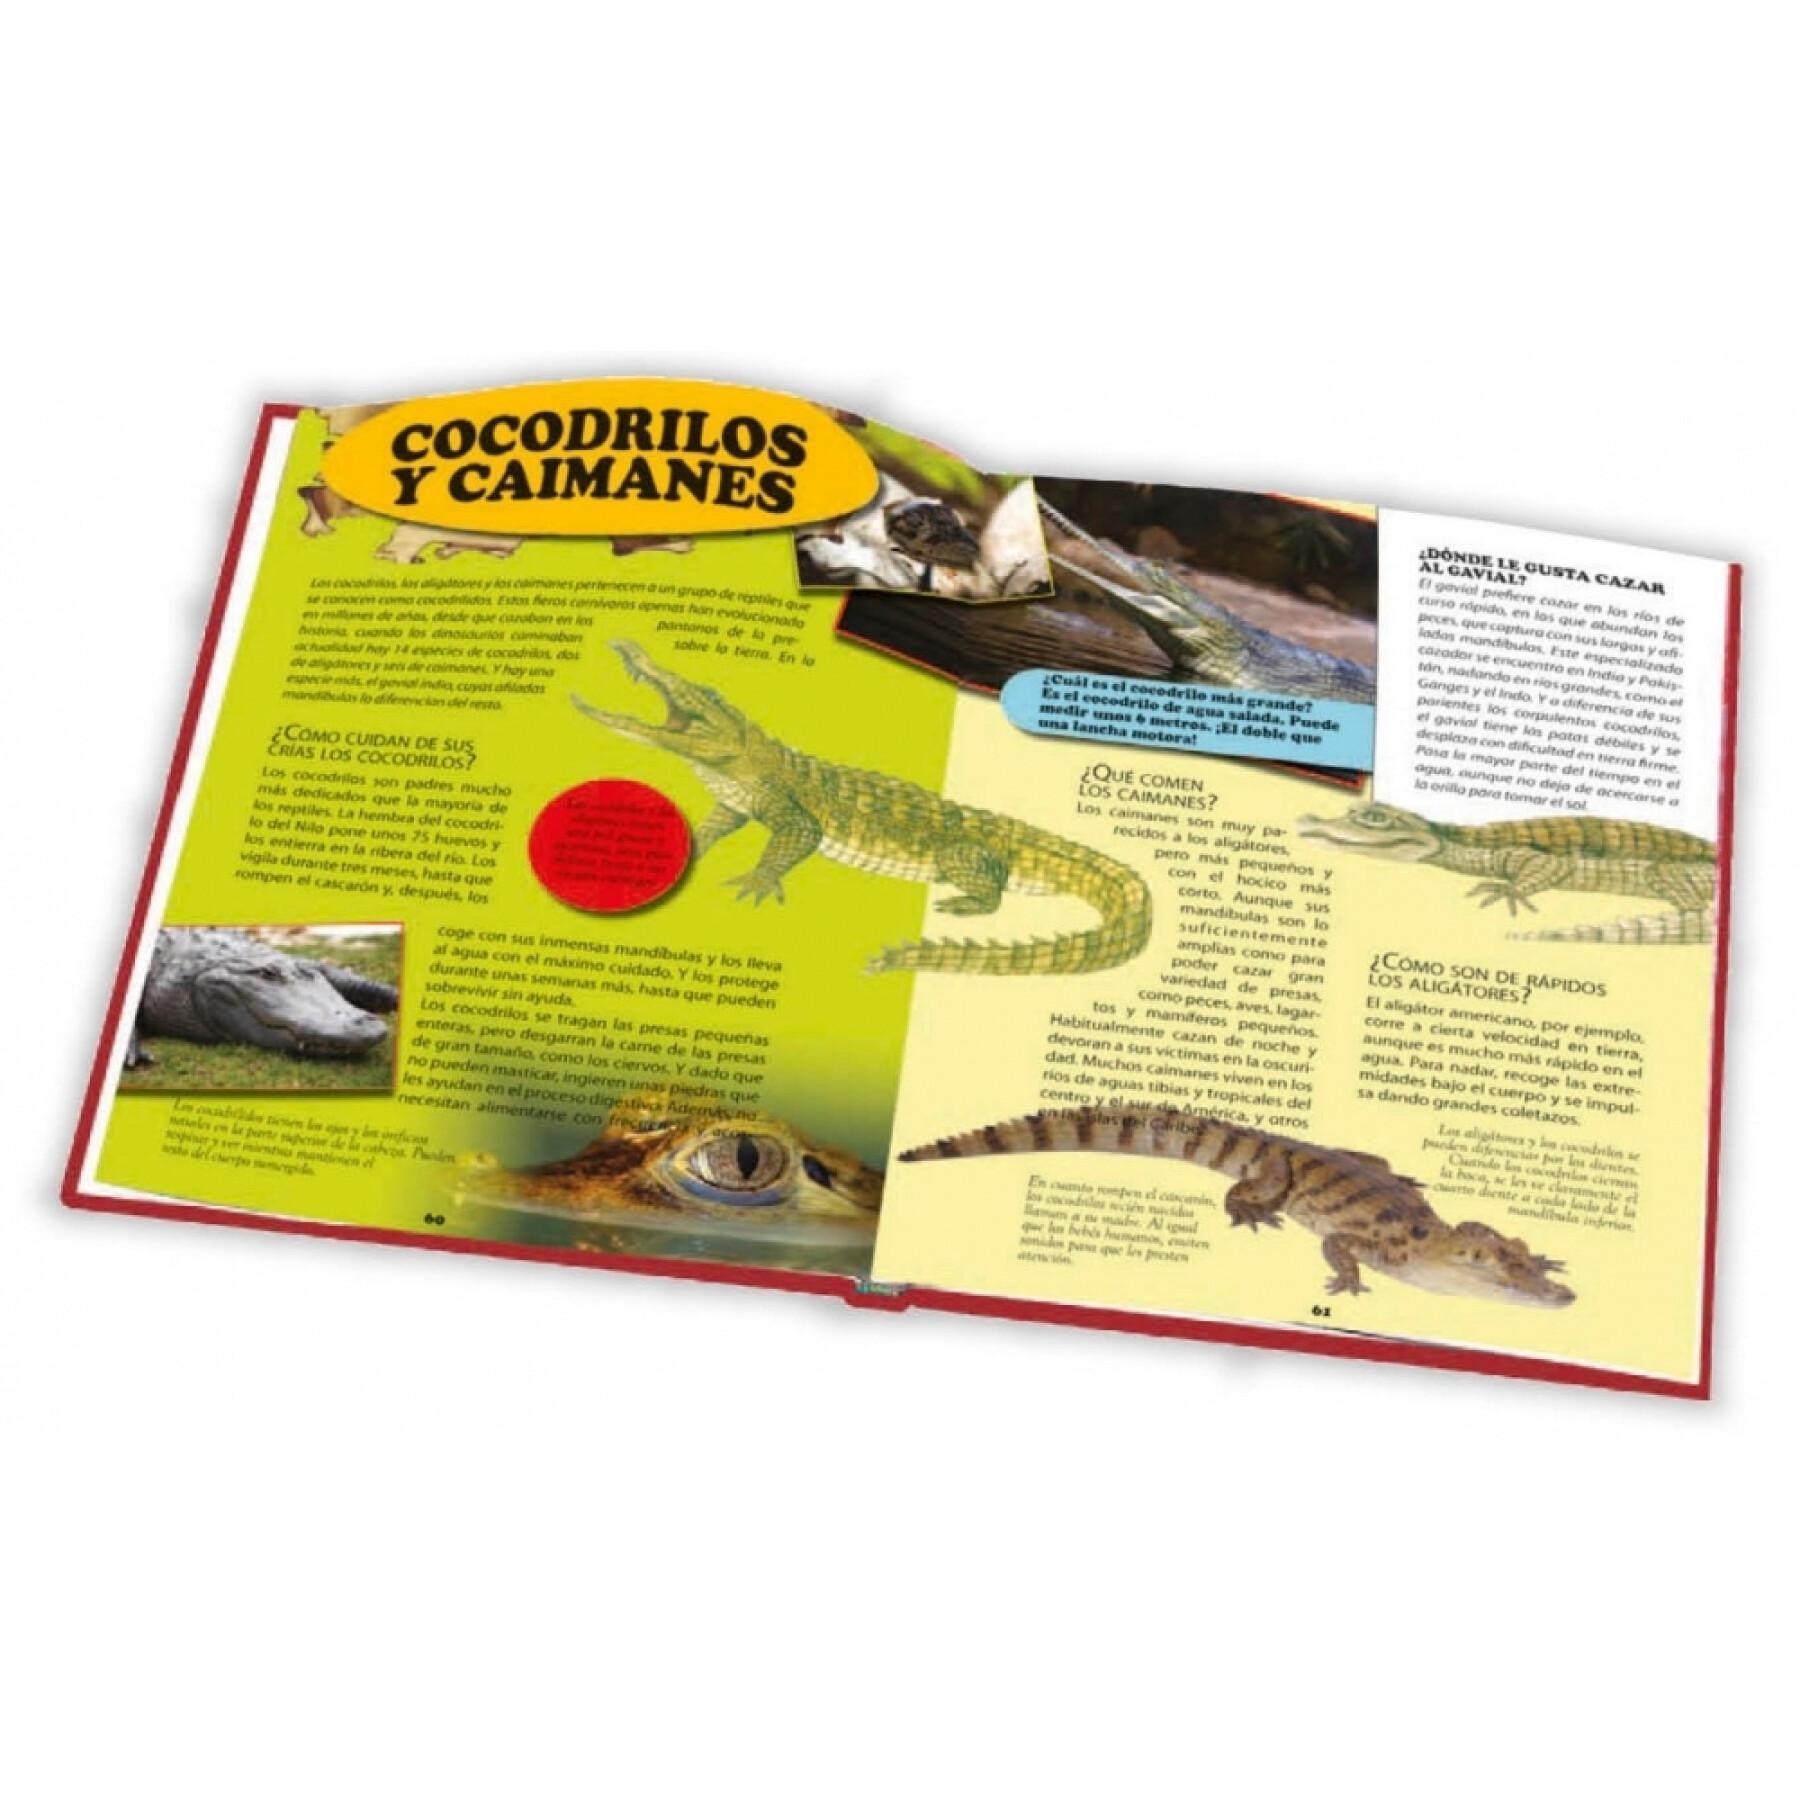 28-sidig uppslagsbok om djur Ediciones Saldaña